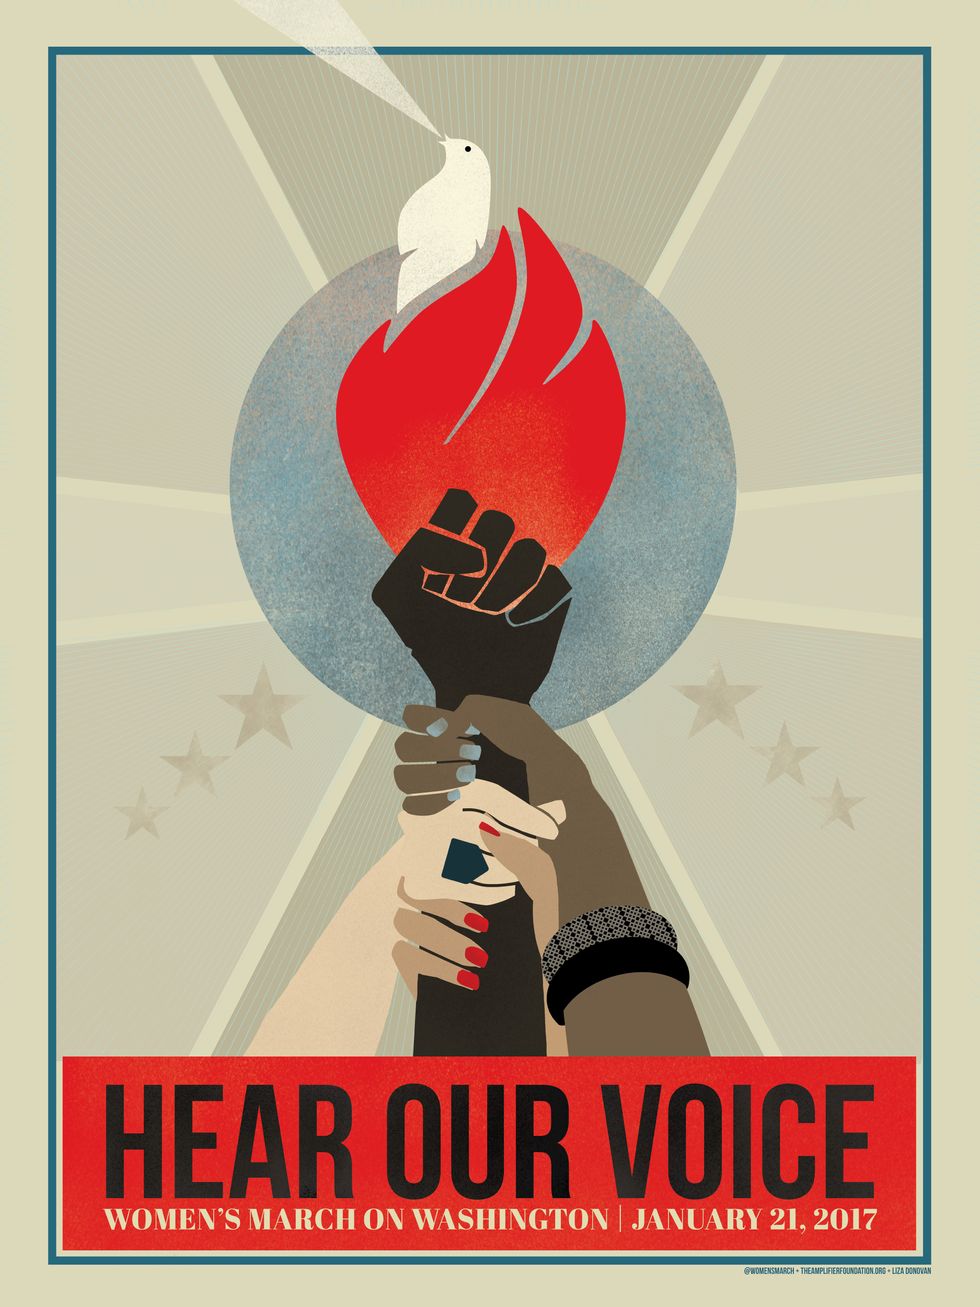 Women's March on Washington - Liza Donovan, "Hear Our Voice"